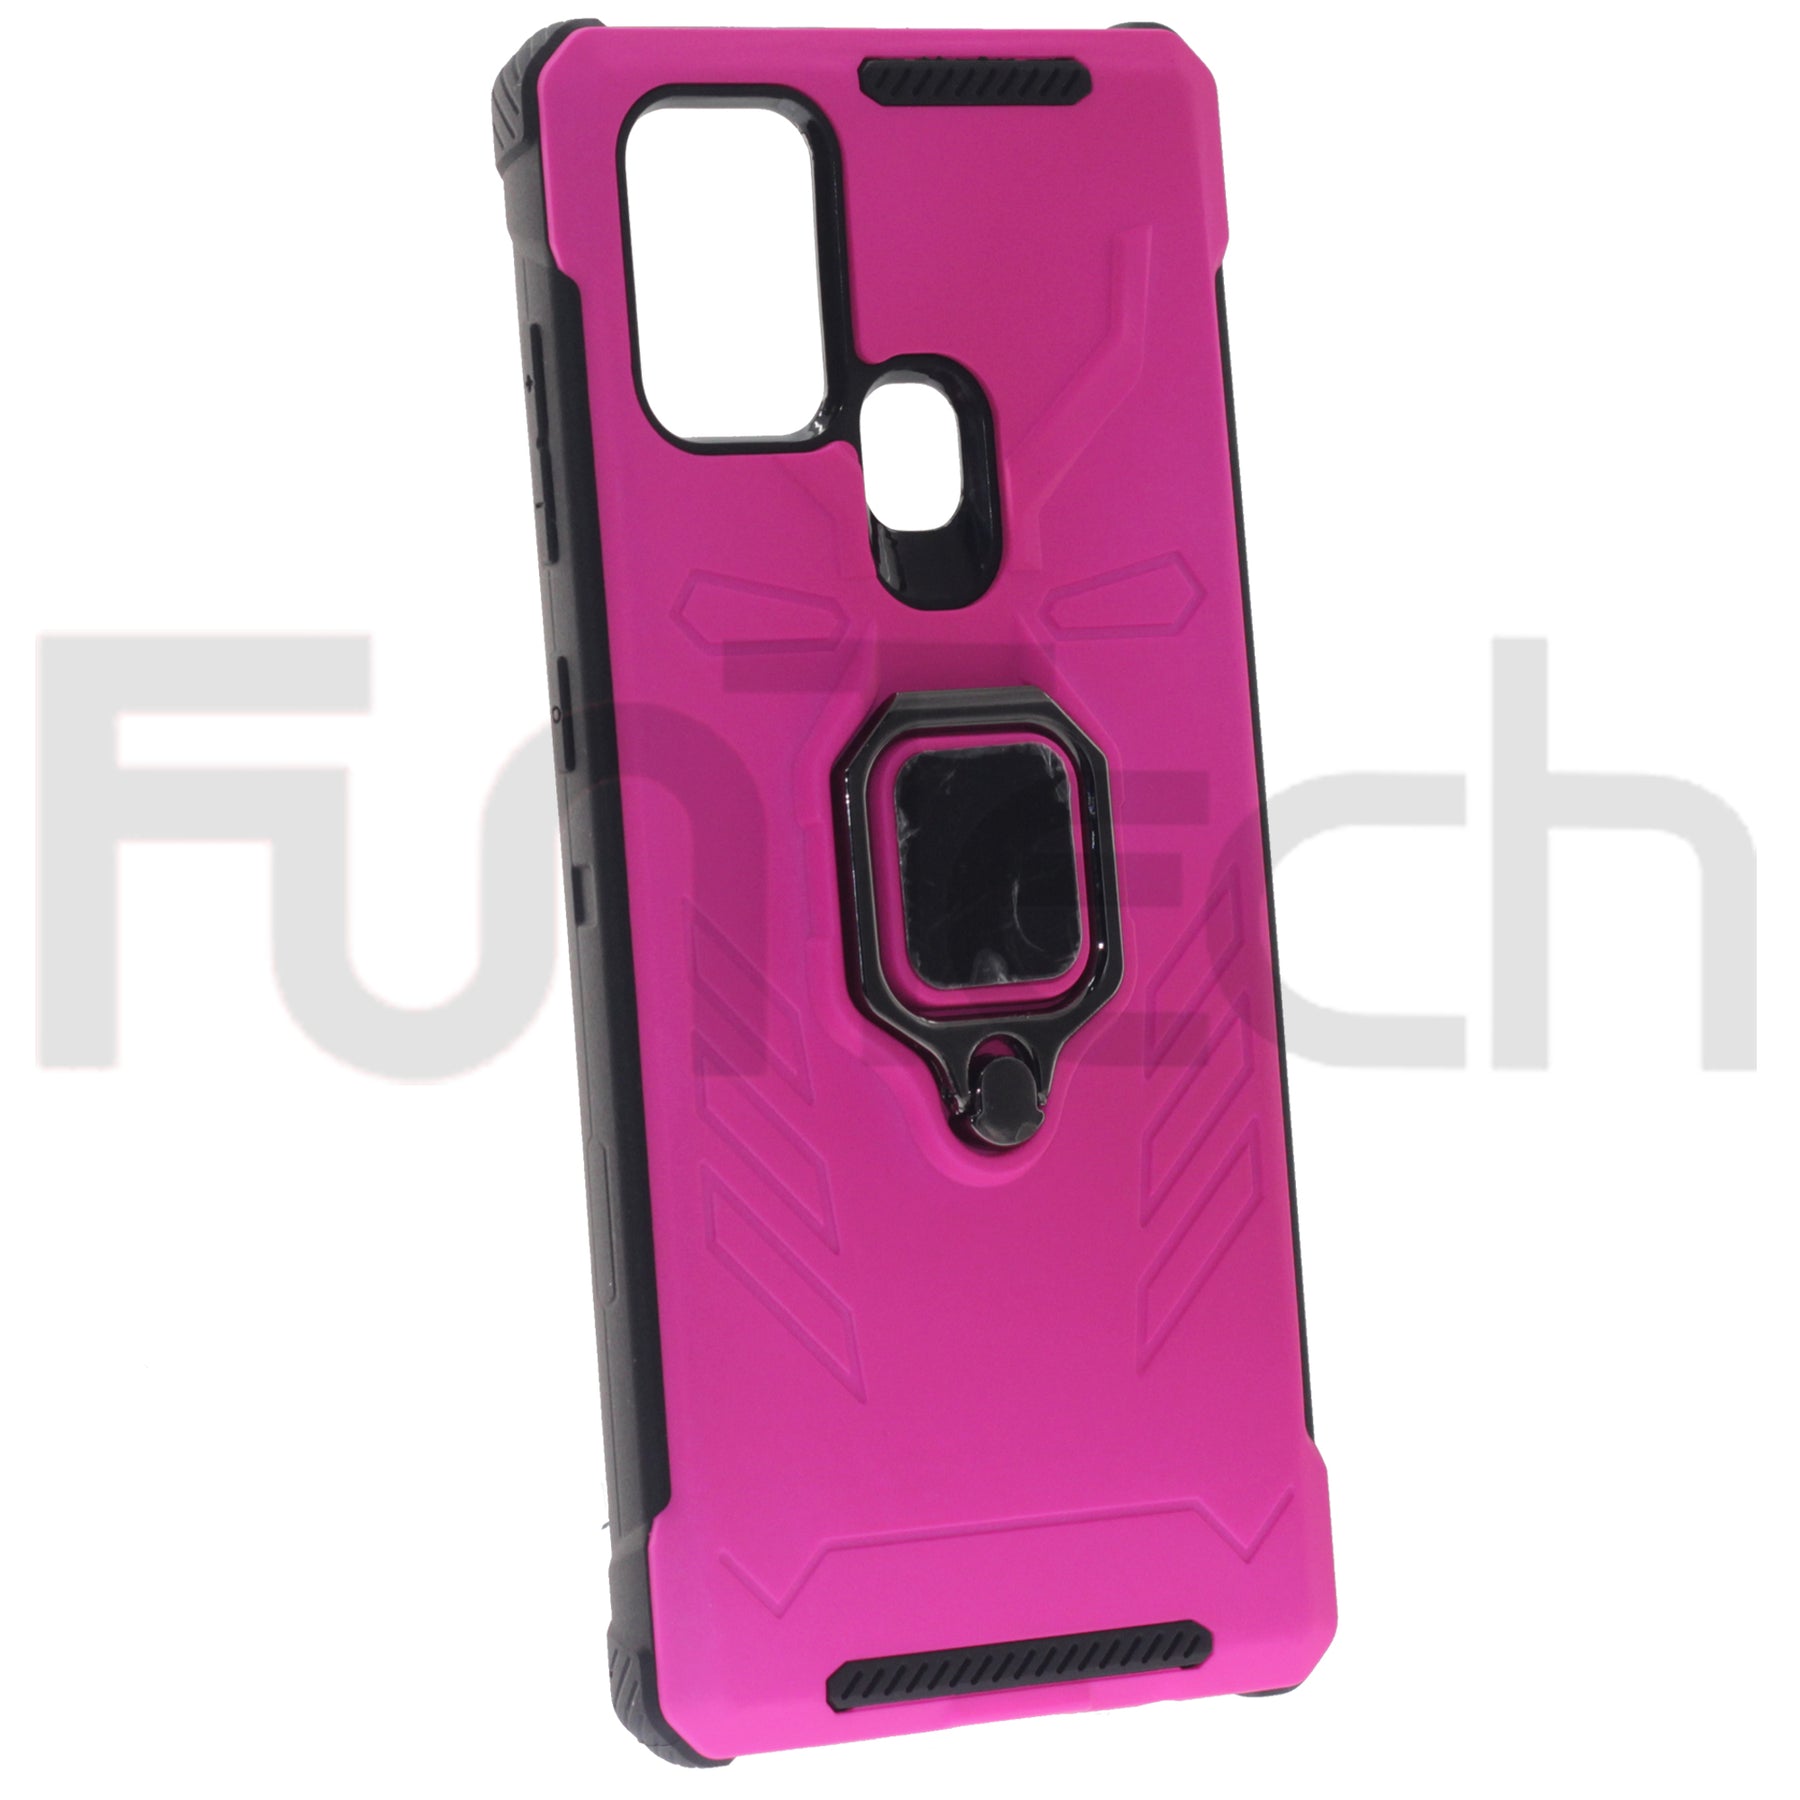 Samsung A21S, Armor Case, Color Pink.